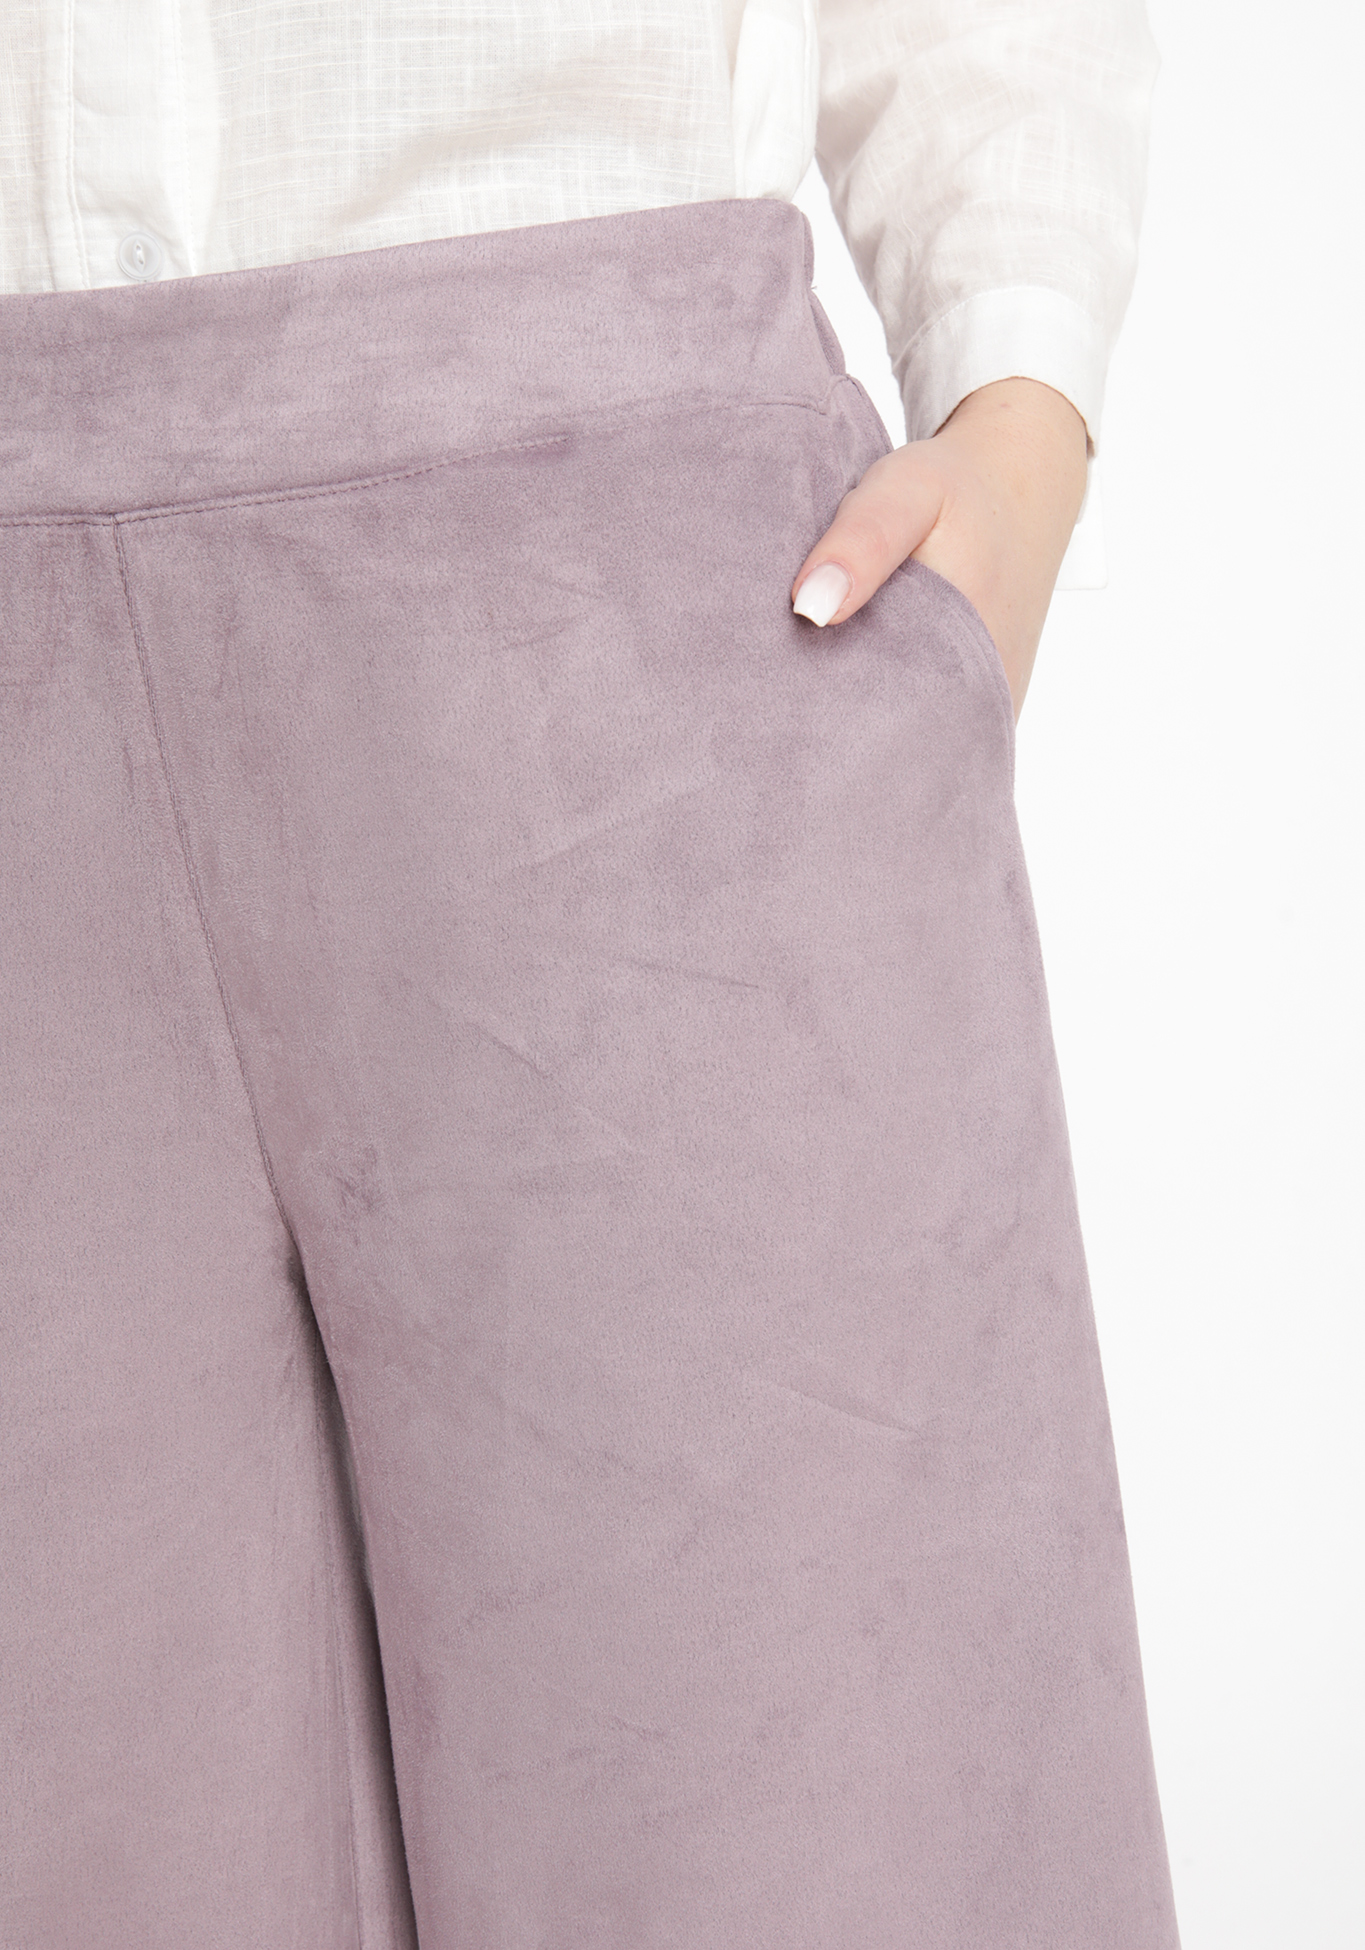 Шорты женские ниже колена из эко-замши Star Fashion, размер 50, цвет бежевый - фото 8